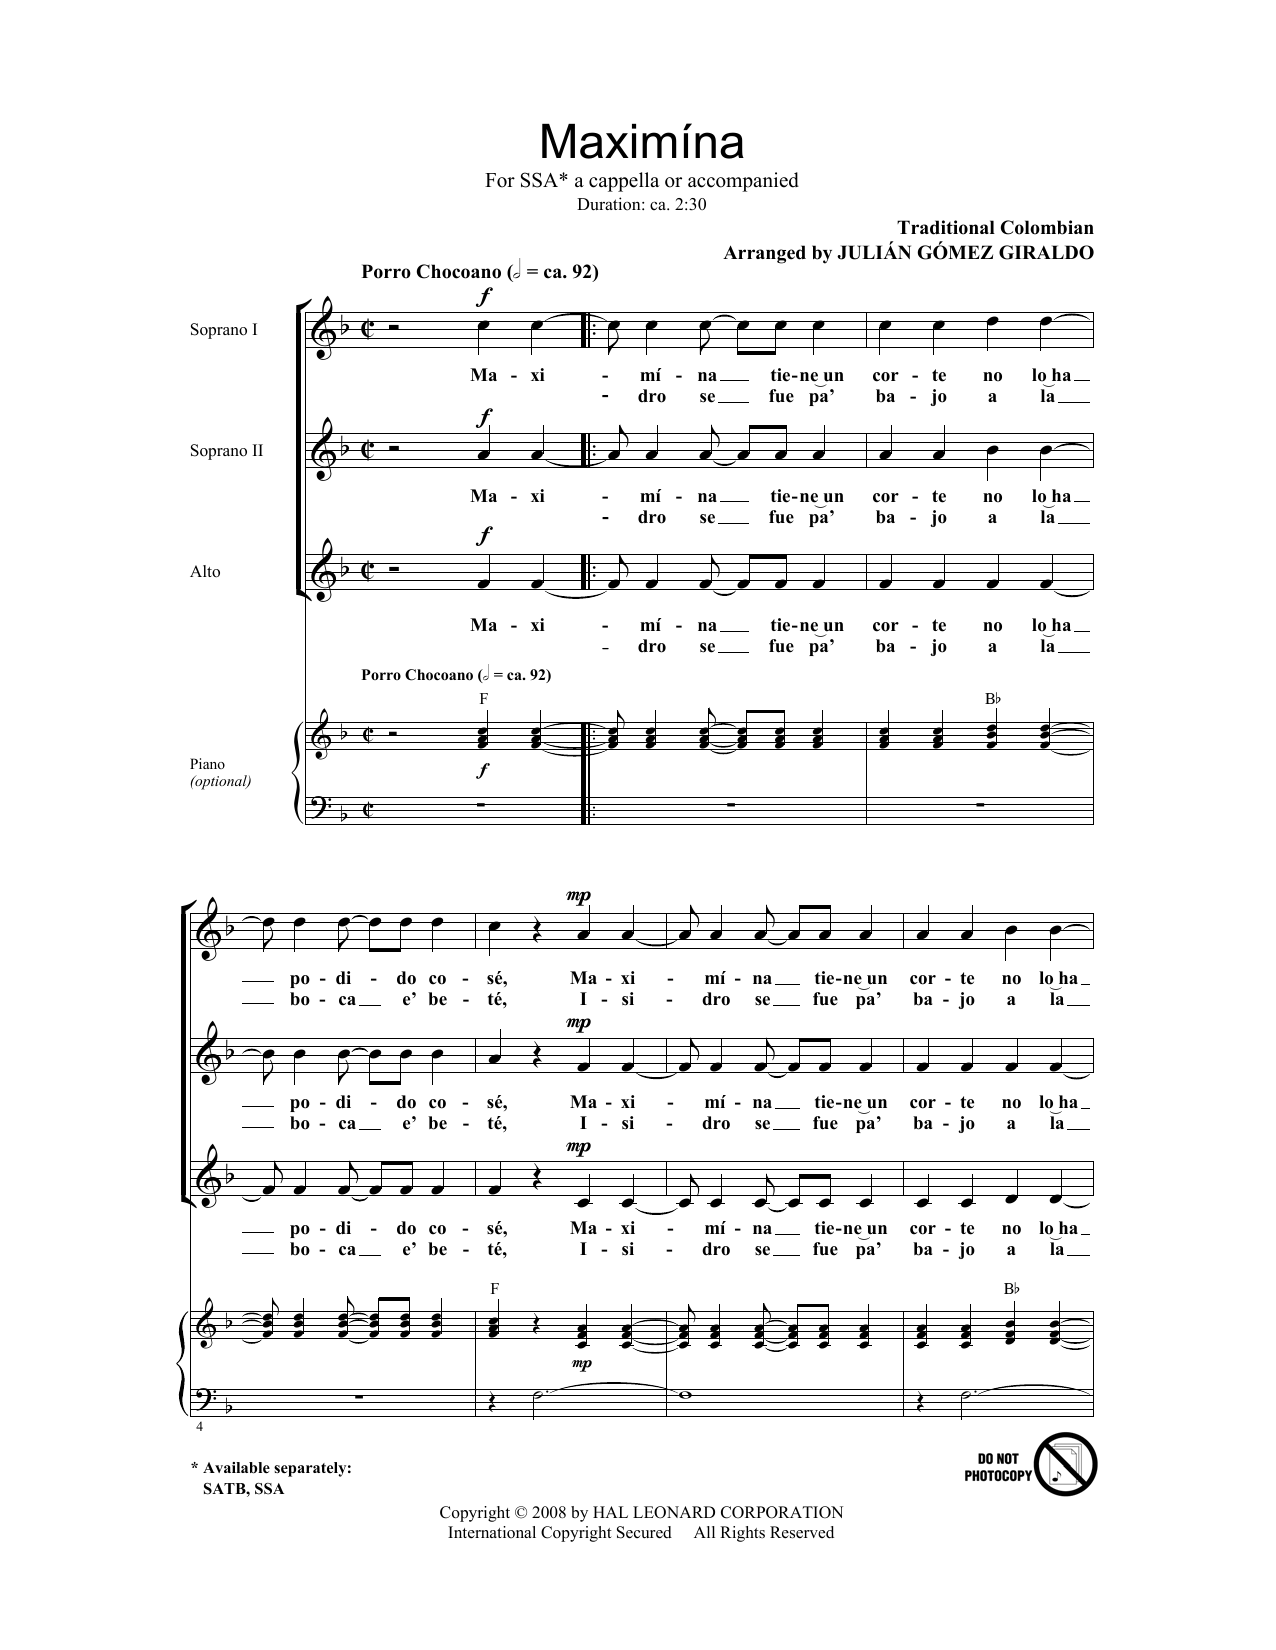 Julian Gomez Giraldo Maximina sheet music notes and chords arranged for SATB Choir